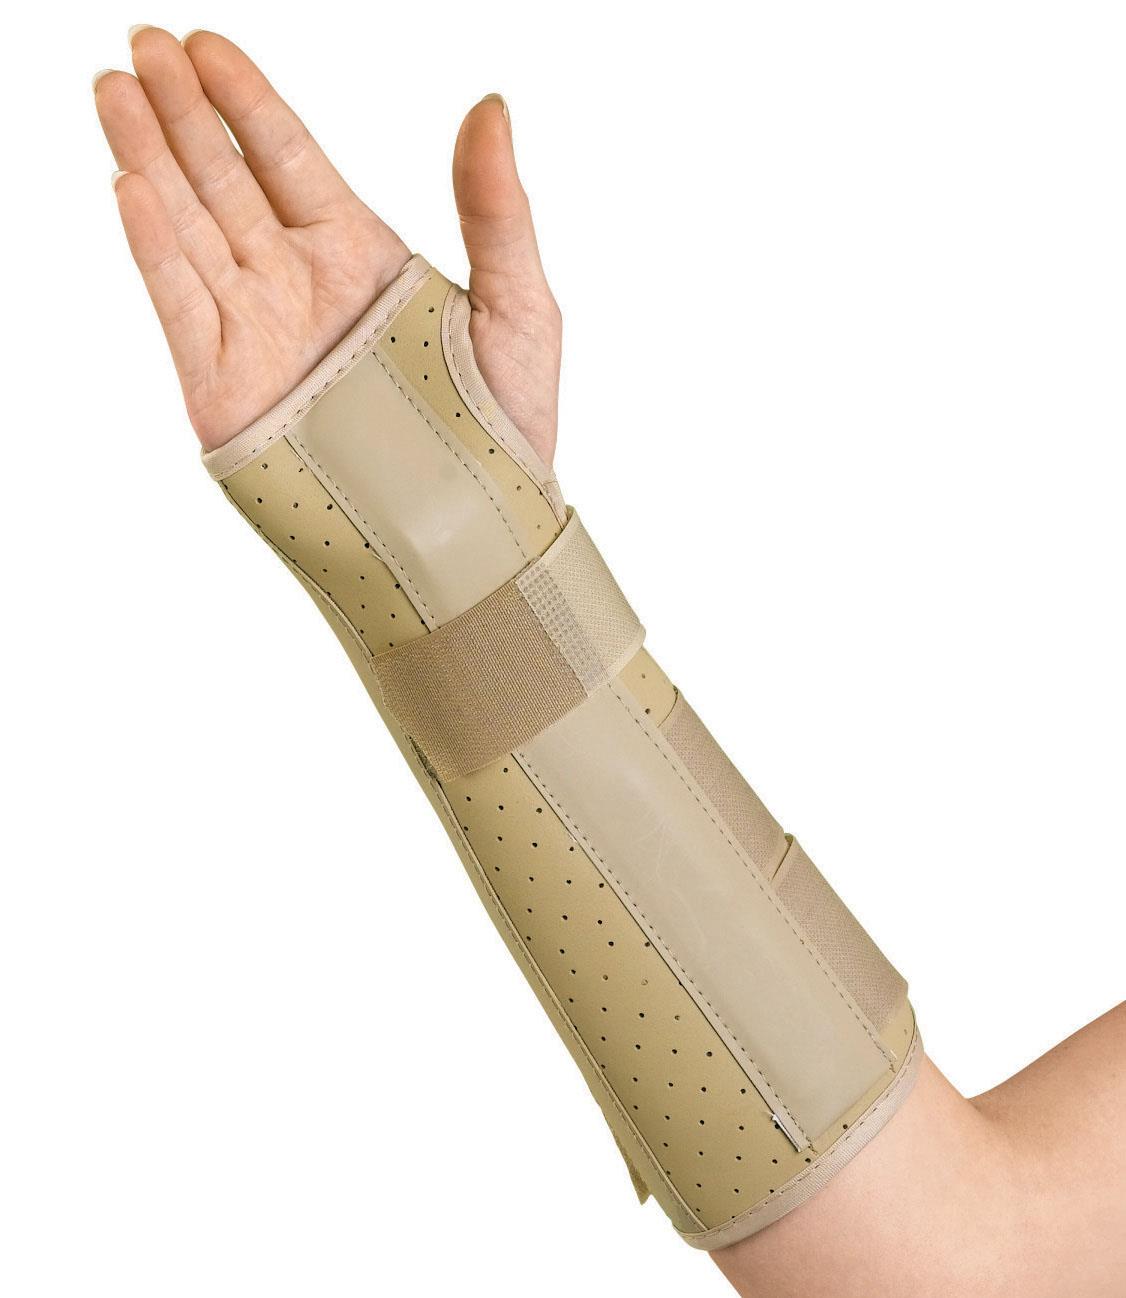 Vinyl Wrist and Forearm Splint